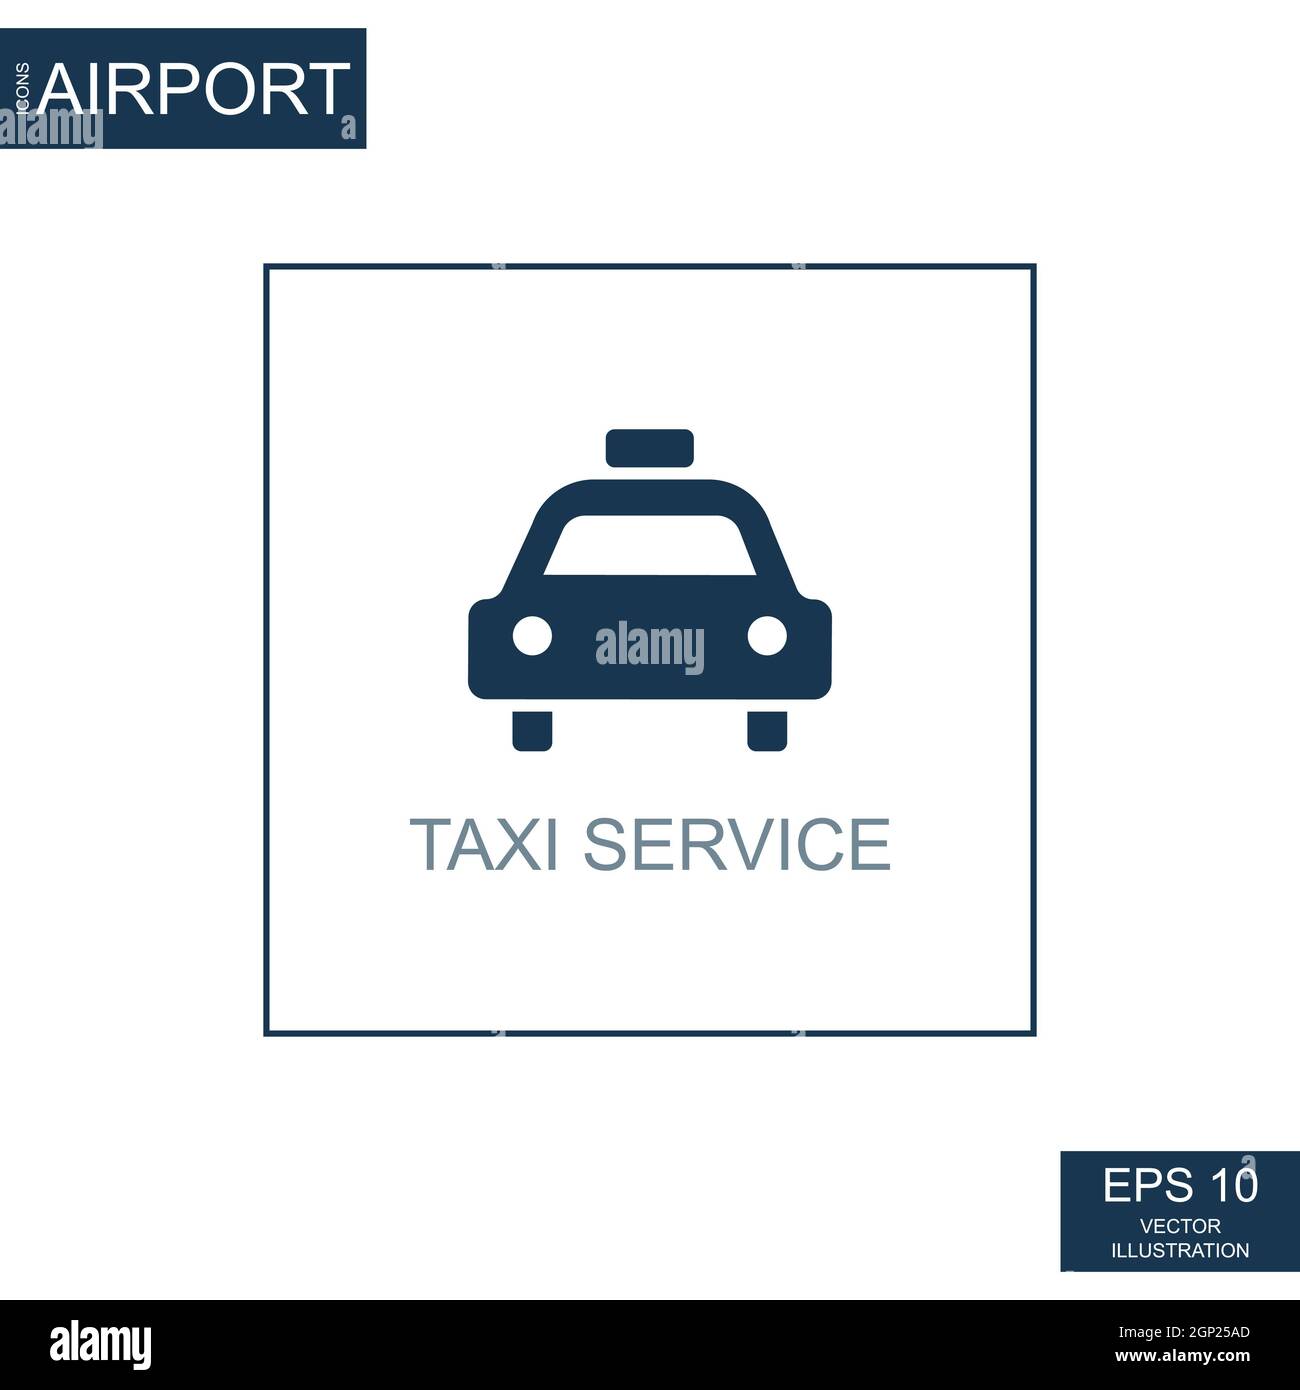 Abstract Icon Taxi-Service zum Thema Flughafen - Vektor-Illustration Stockfoto